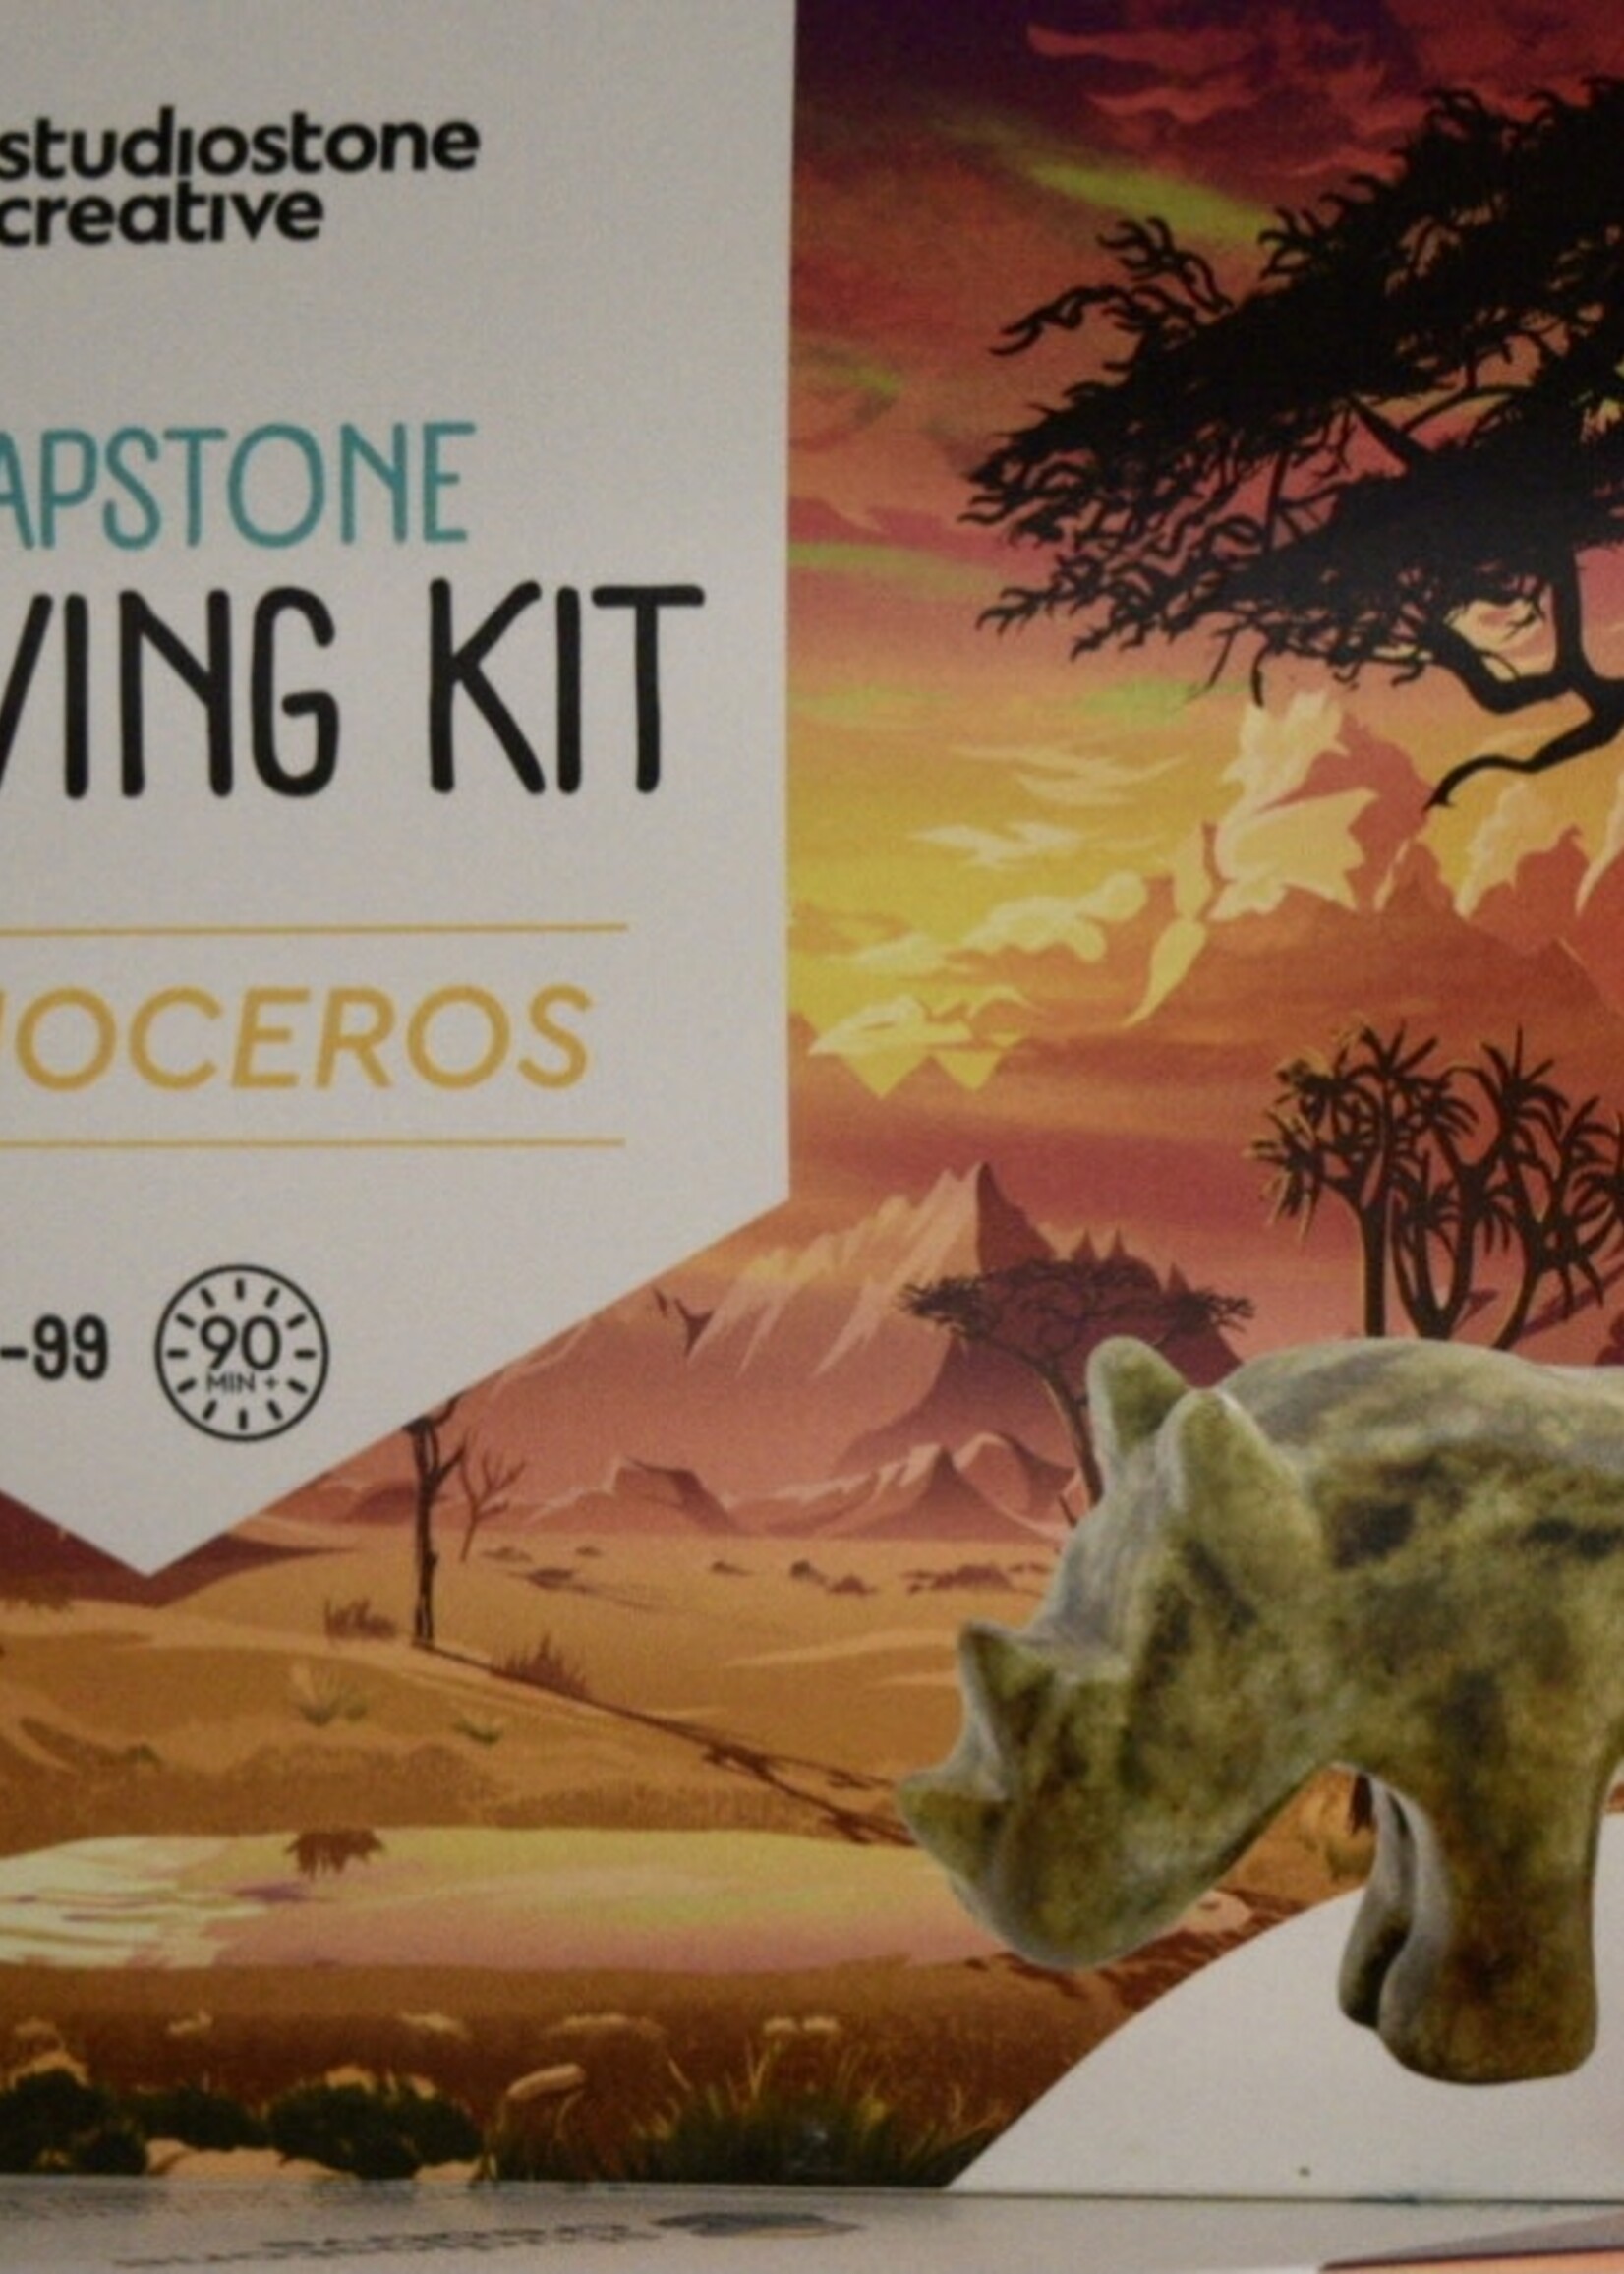 Soapstone Carving Kit - Rhinoceros